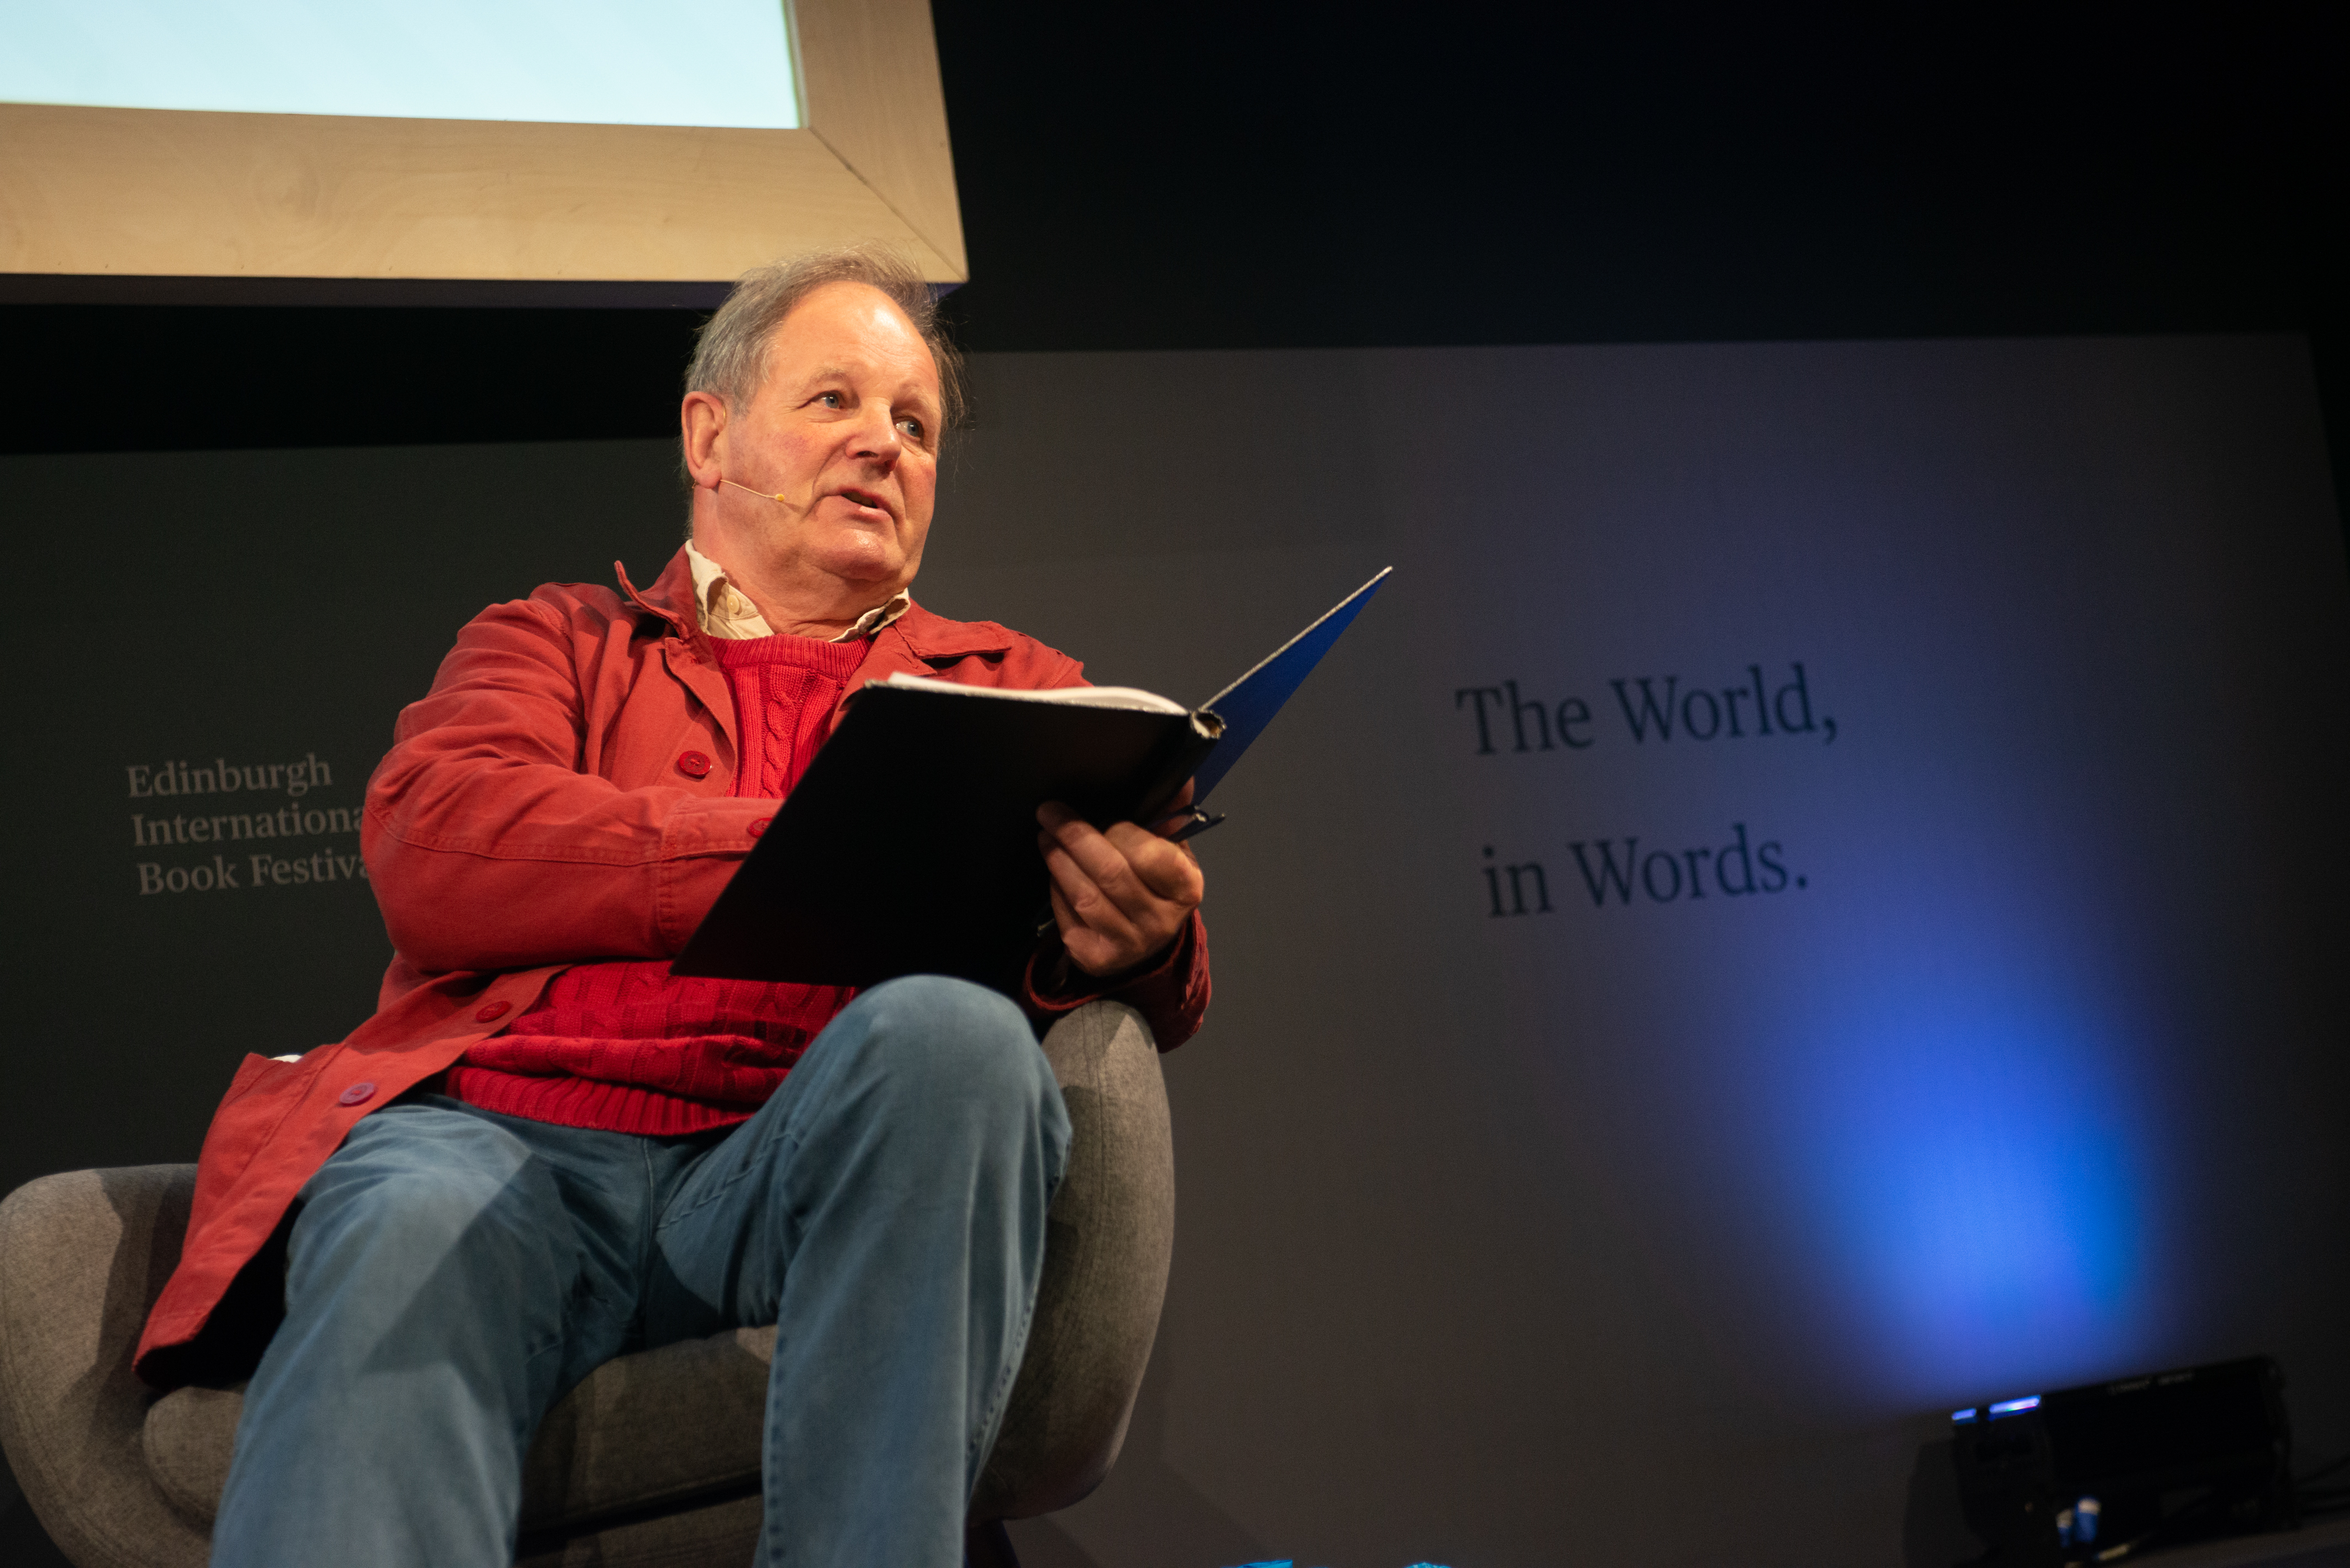 Michael Morpurgo at Edinburgh International Book Festival © Alan McCredie, Edinburgh International Book Festival